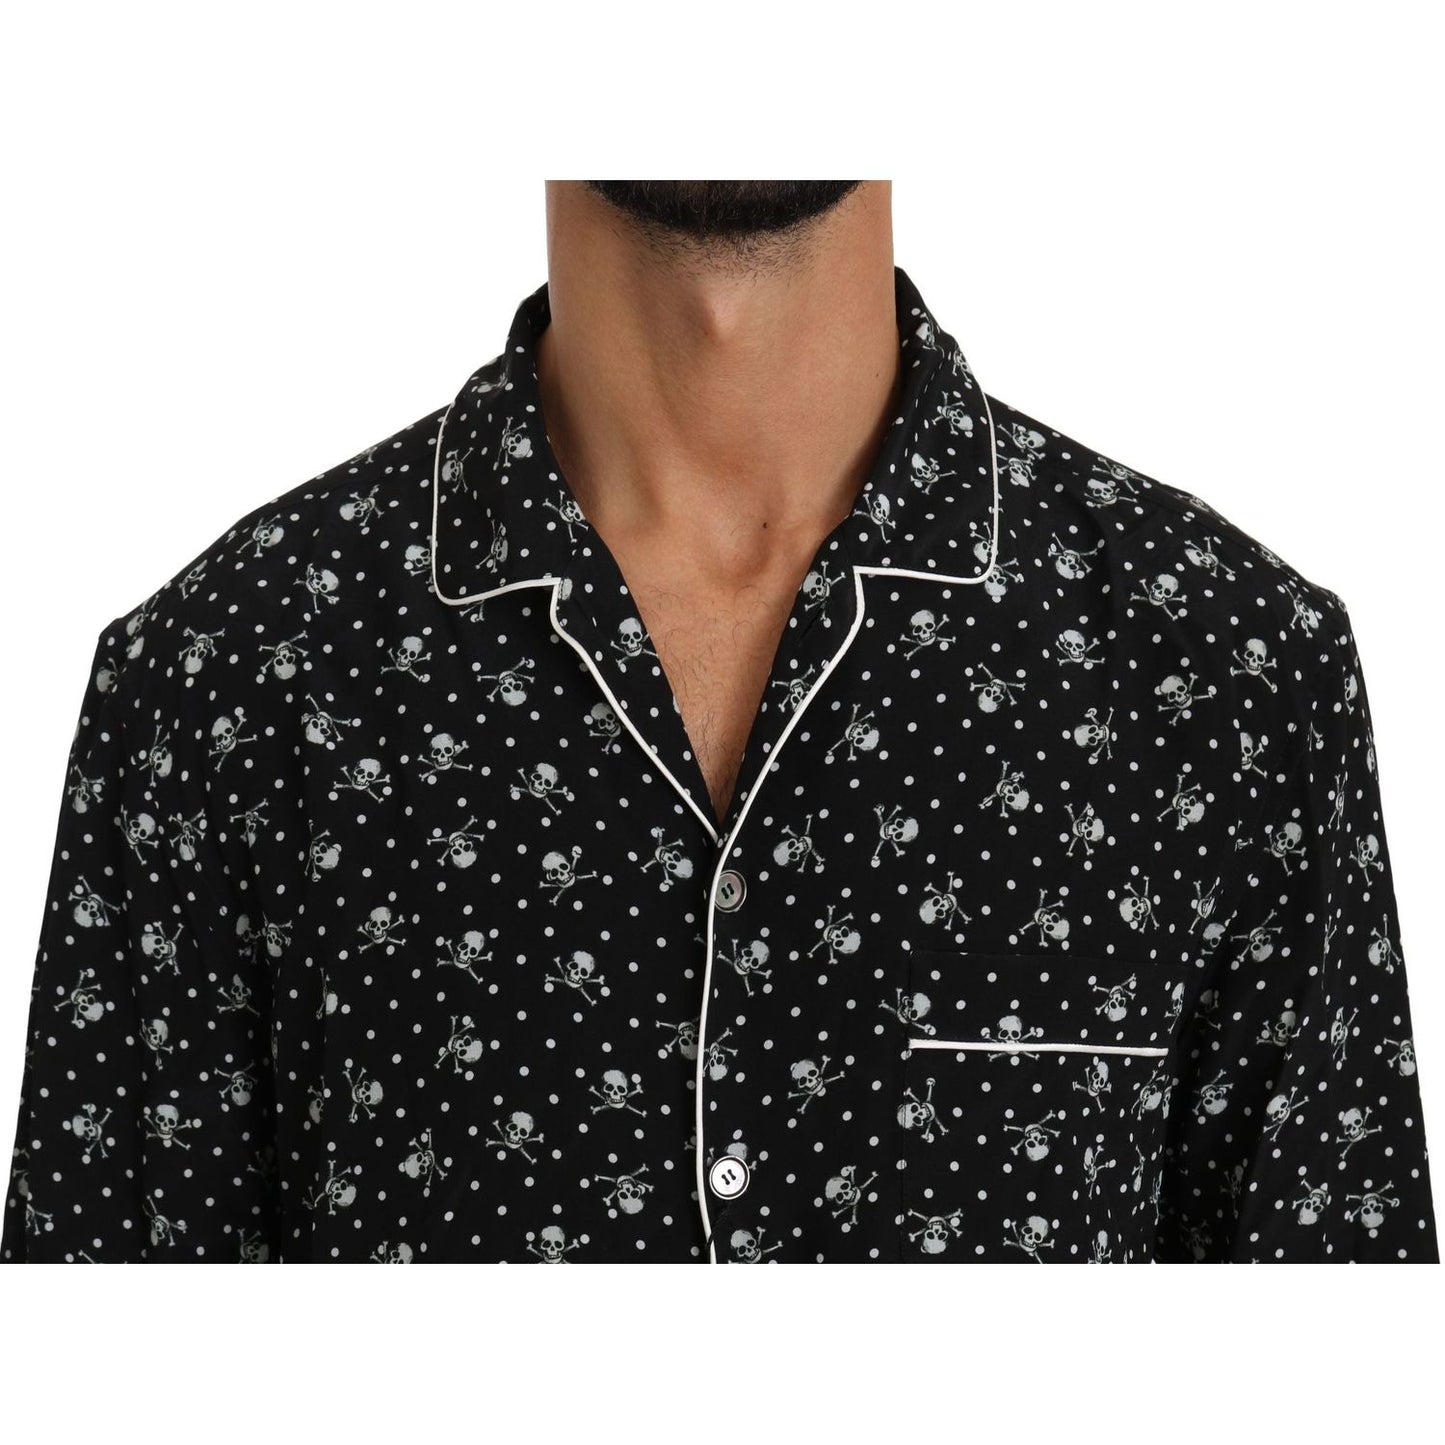 Dolce & Gabbana Elegant Silk Pajama Shirt with Skull Print black-skull-print-silk-sleepwear-shirt IMG_0789-1-scaled-75aea63c-c14.jpg